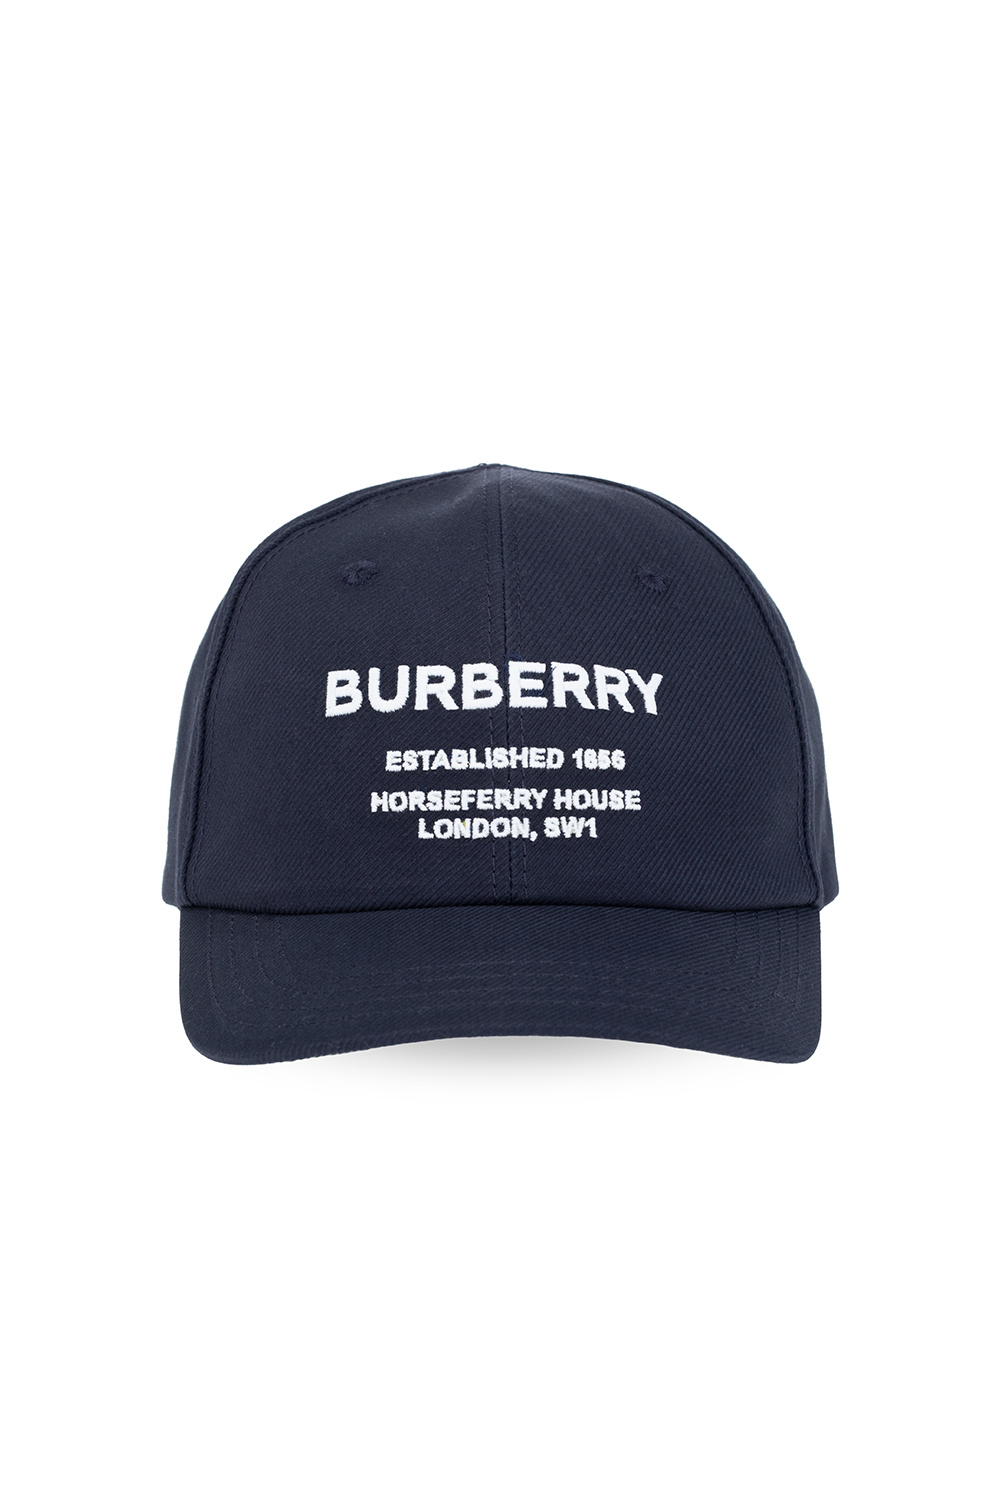 burberry 4-14 Kids Baseball cap with logo